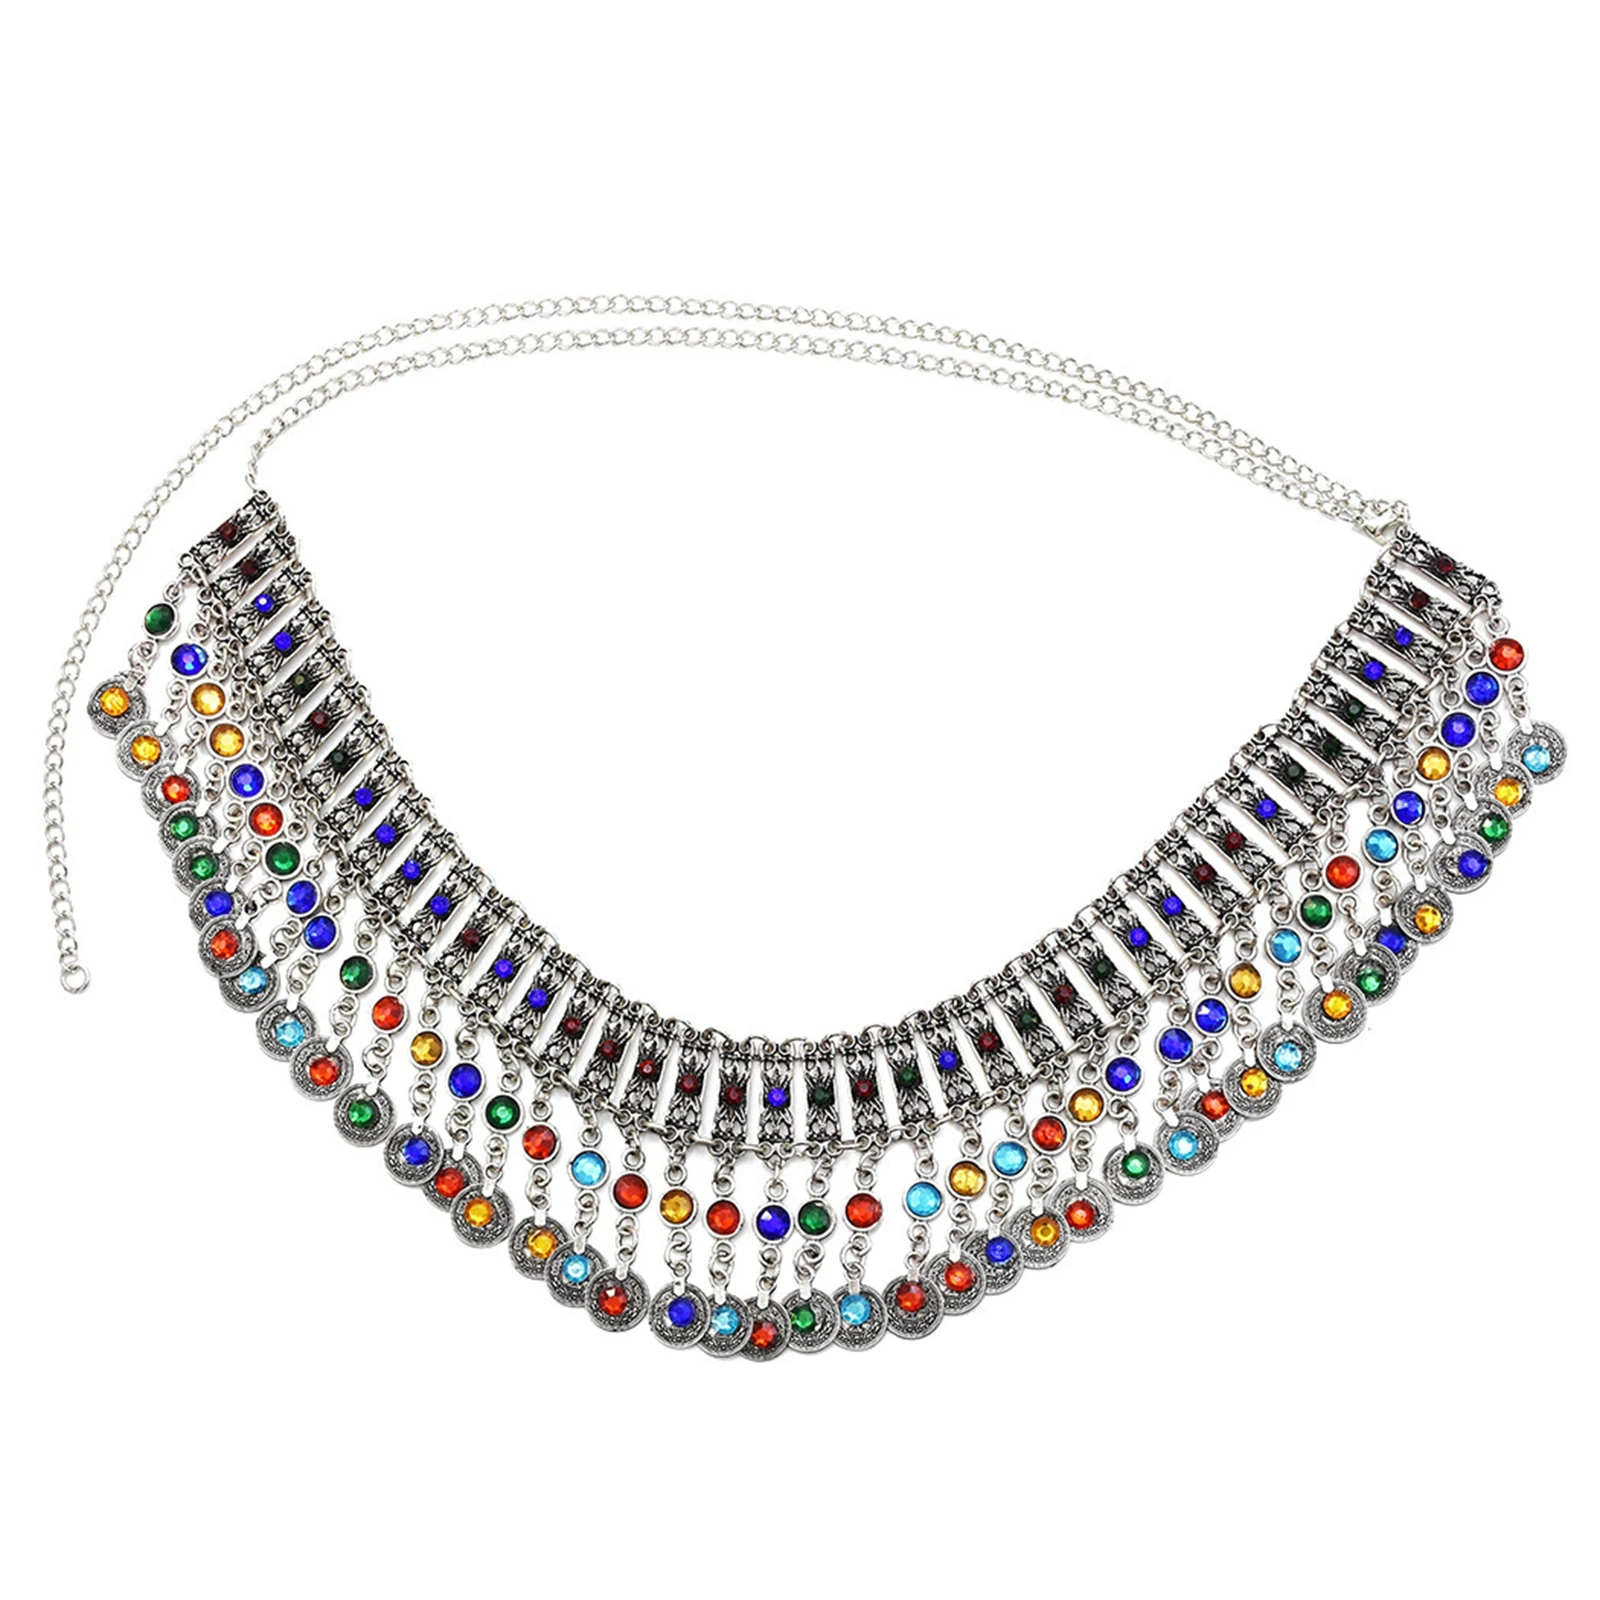 Waist Decor Bohemian Style Women Ladies Fashion Beach Jewelry Handmade Colorful Beads Bracelet Belly Chain